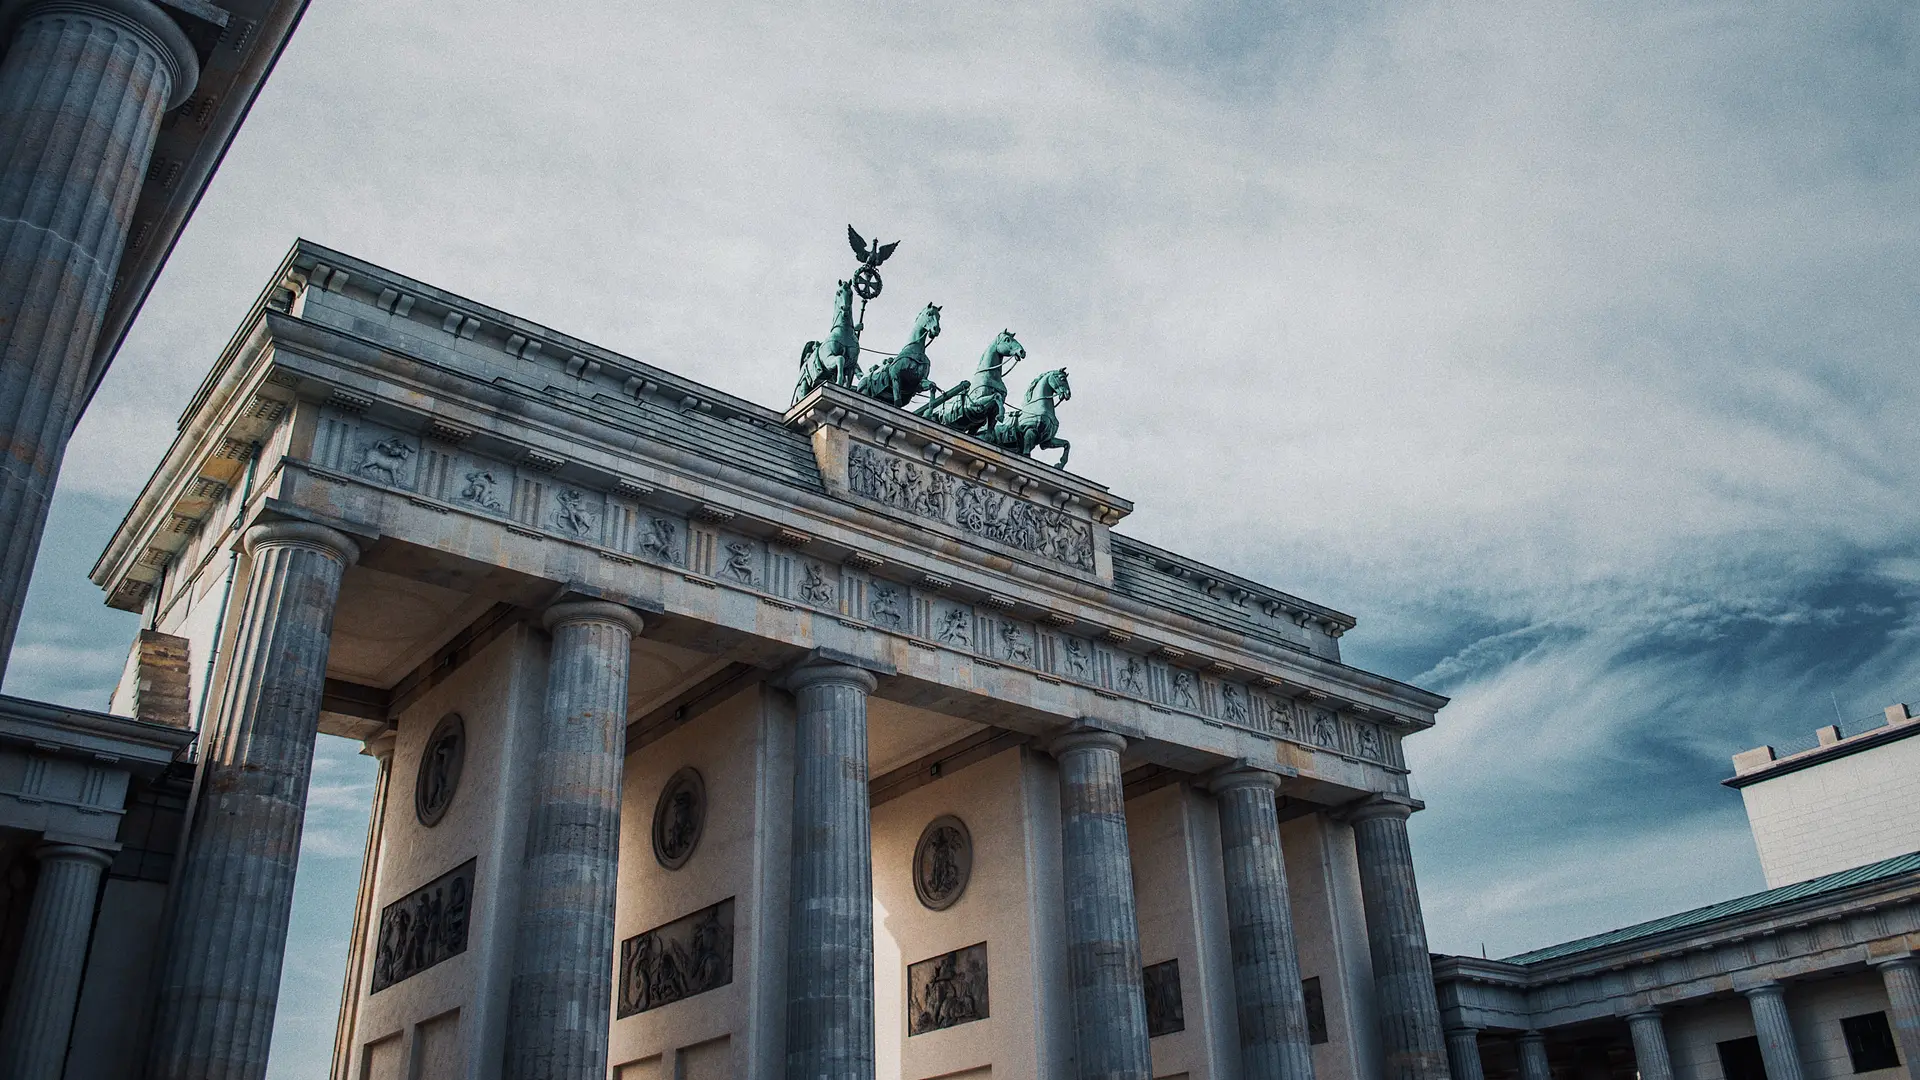 Destinations Articles - Berlin Travel Guide